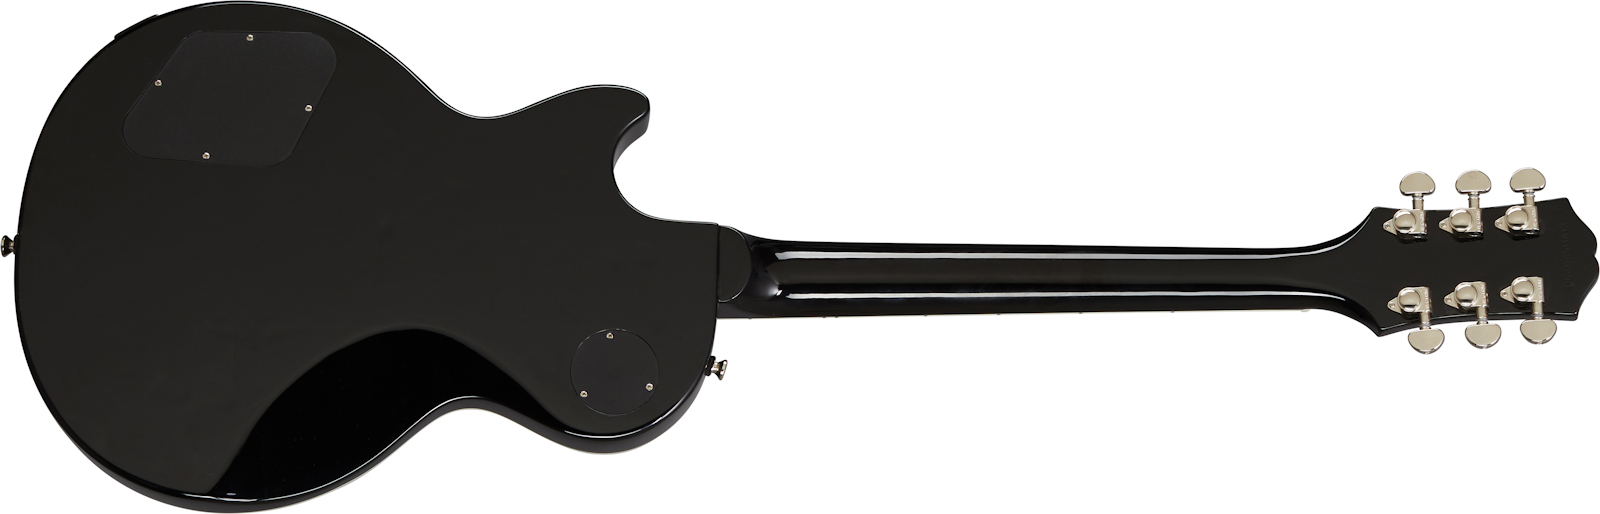 Epiphone Les Paul Muse Modern 2h Ht Lau - Jet Black Metallic - Single cut electric guitar - Variation 2